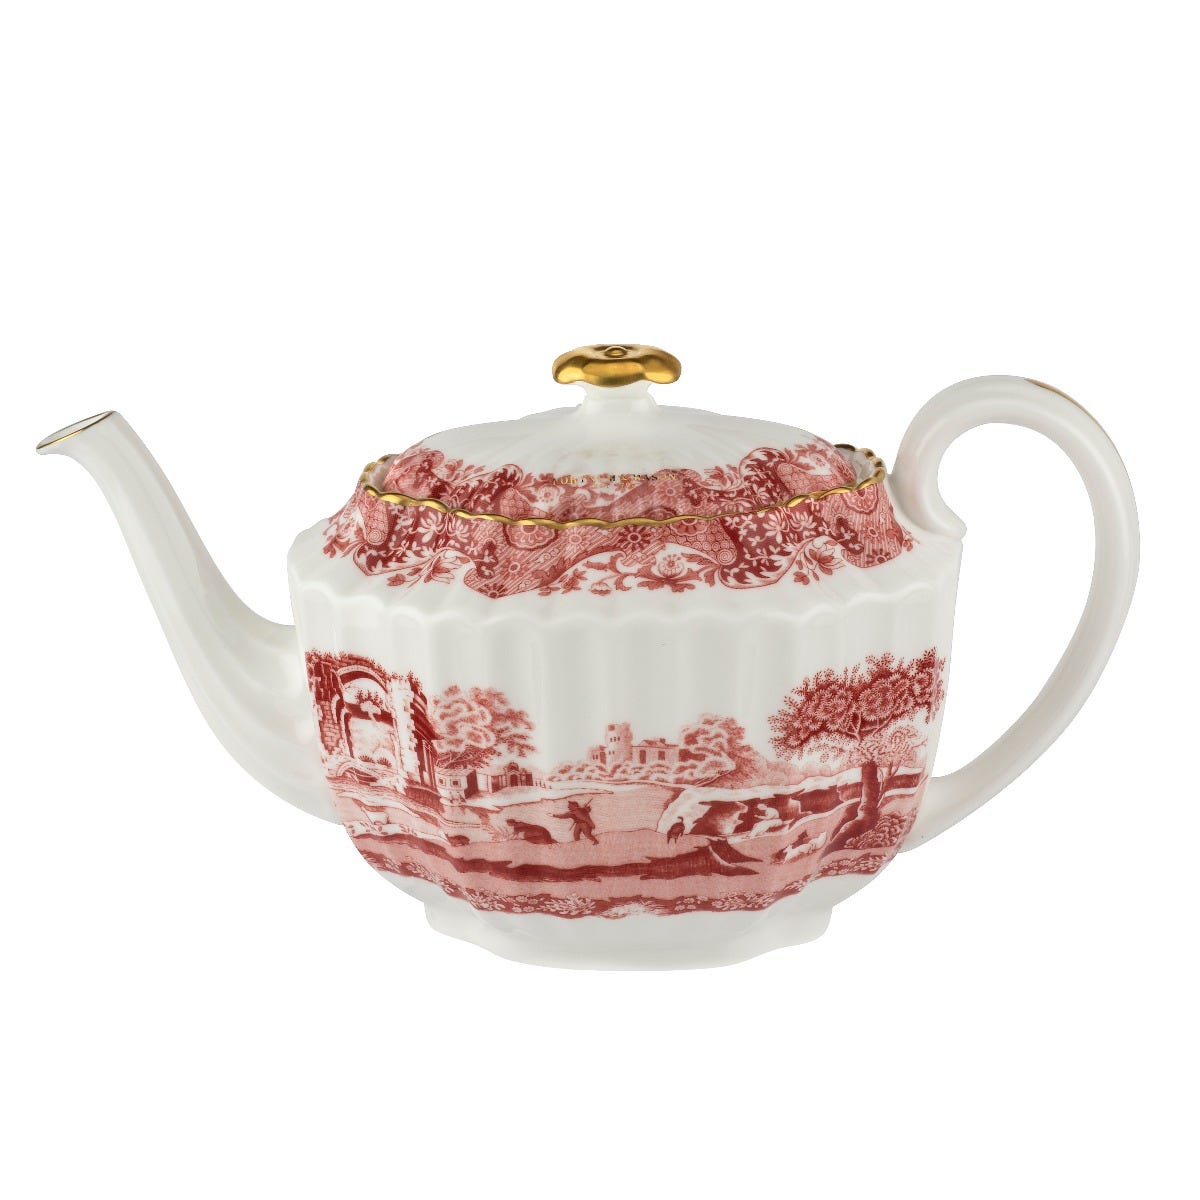 1770 Italian Teapot, Cranberry, Large, Spode